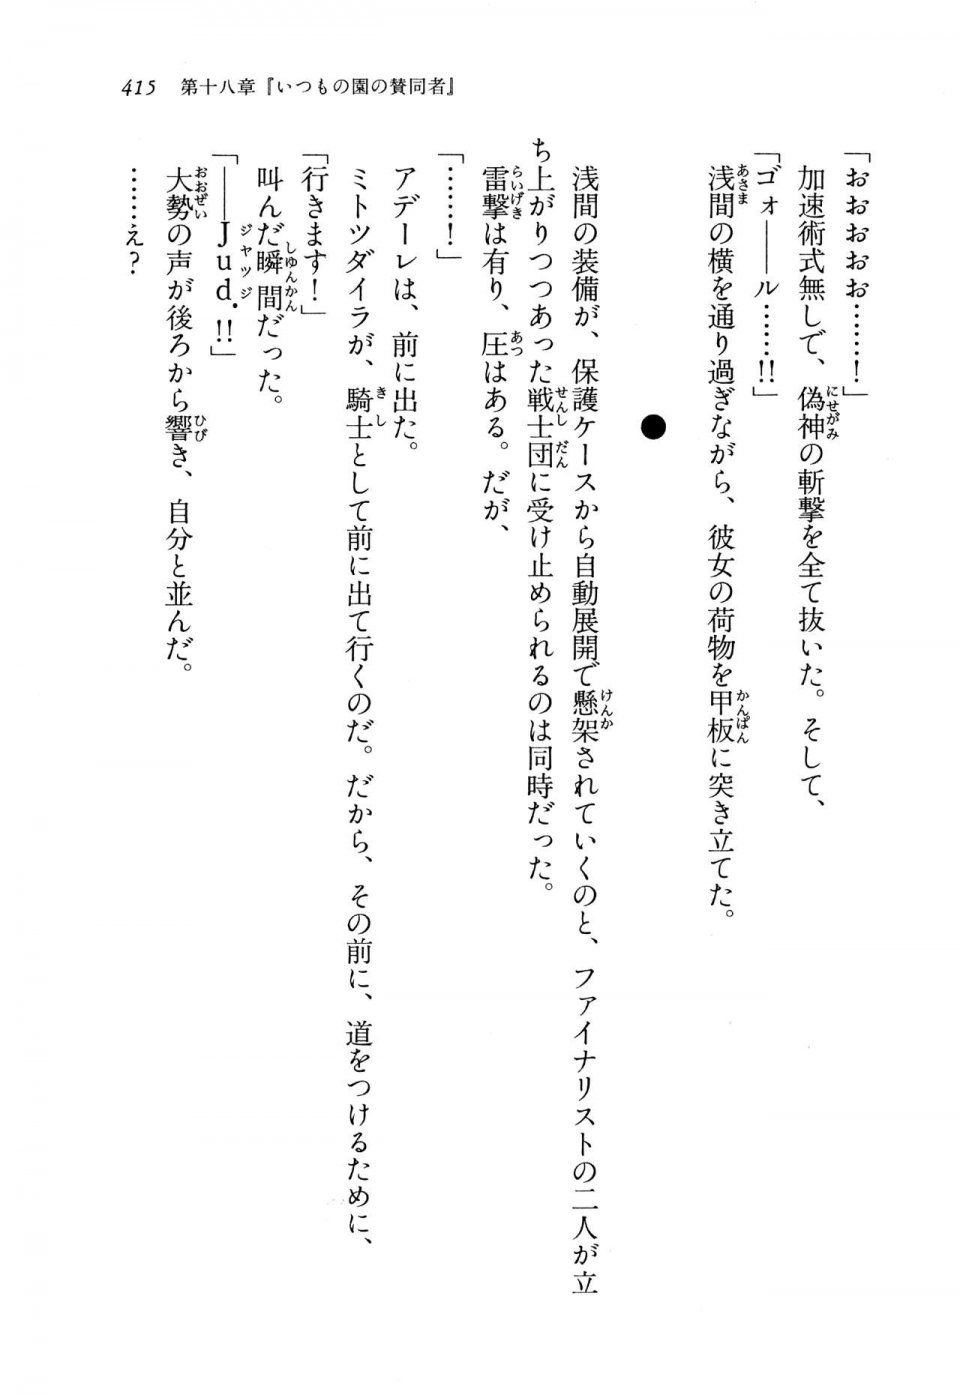 Kyoukai Senjou no Horizon BD Special Mininovel Vol 8(4B) - Photo #419